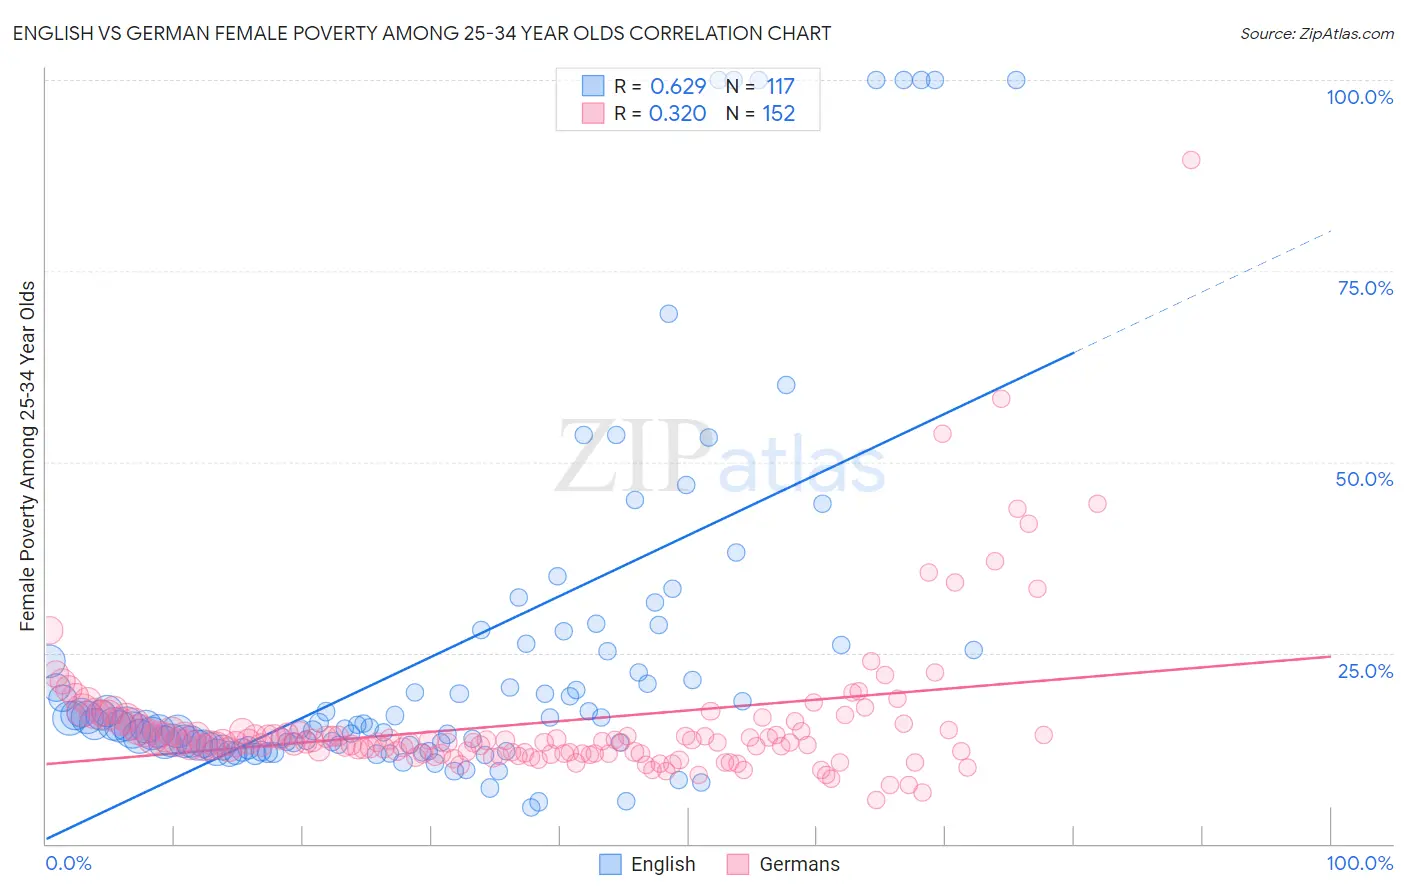 English vs German Female Poverty Among 25-34 Year Olds